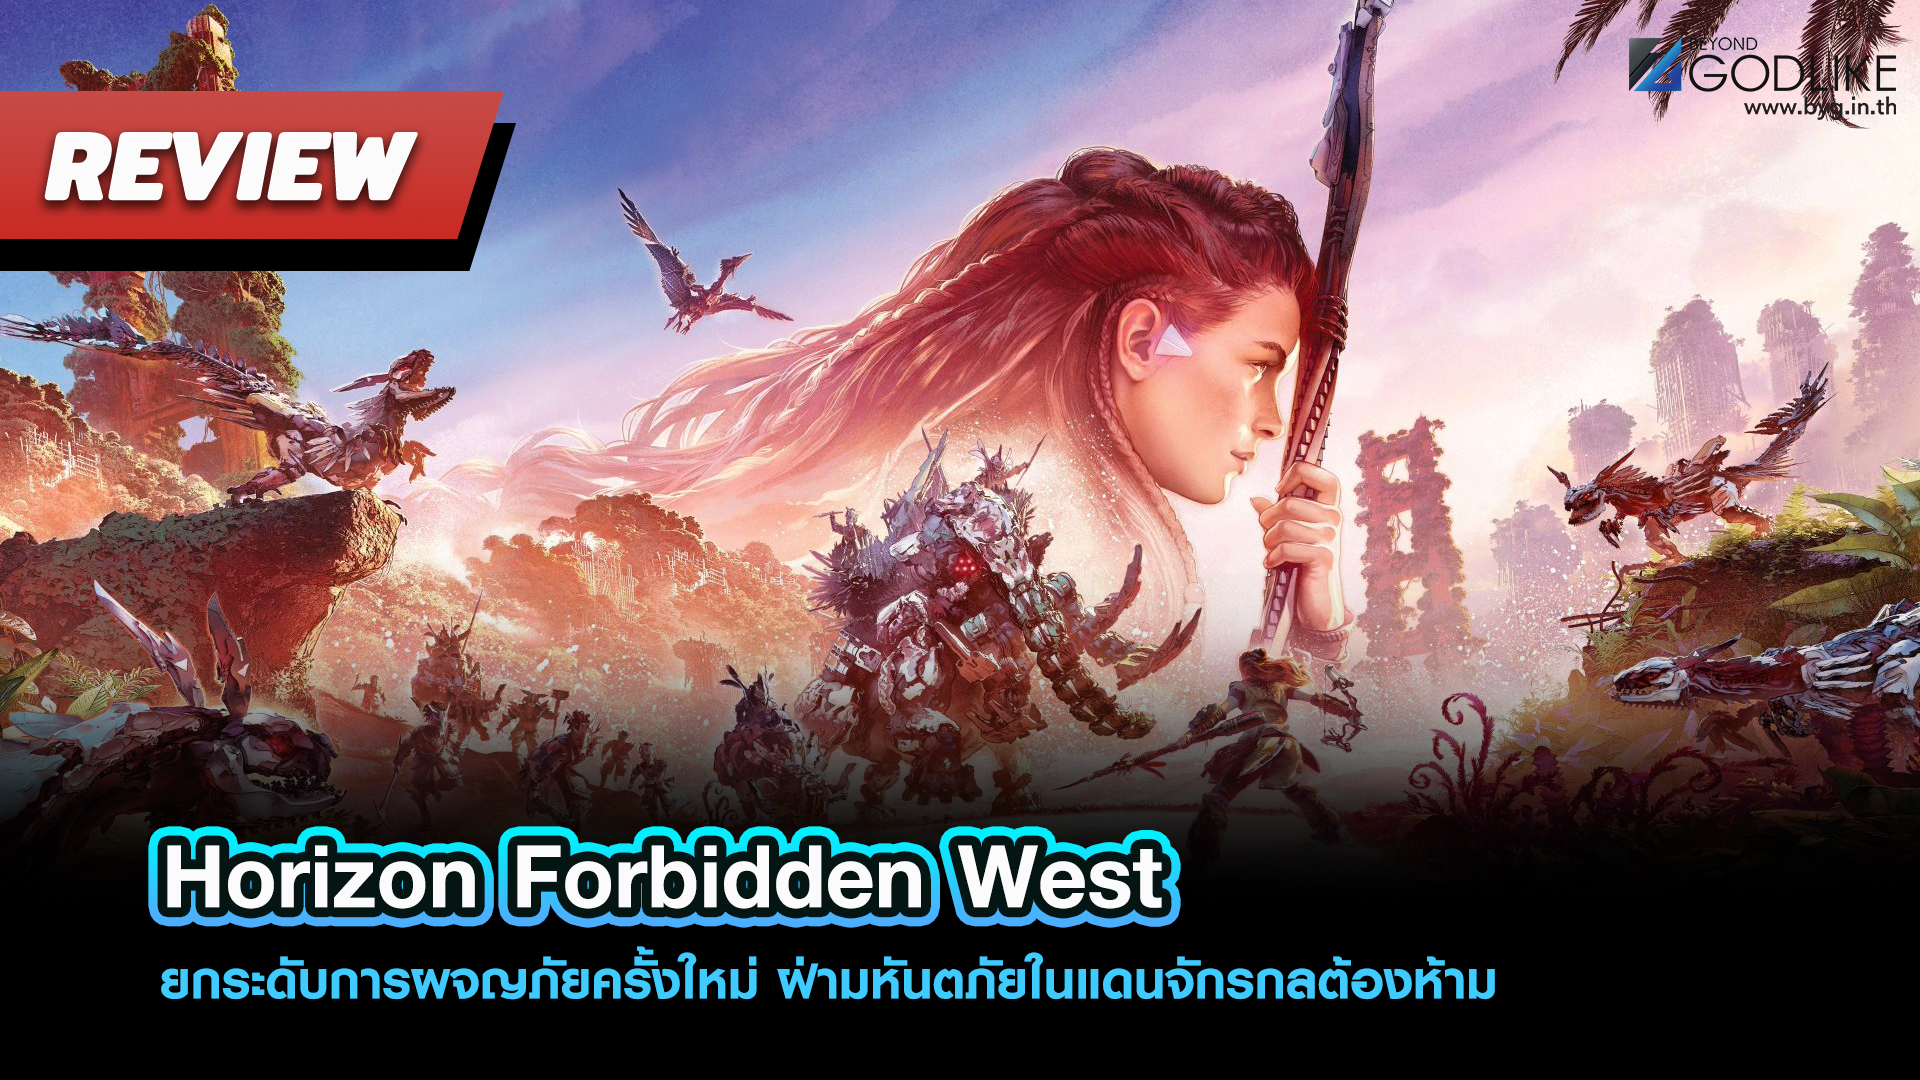 [Review] Horizon Forbidden West ยกระดับการผจญภัยครั้งใหม่ ฝ่ามหันตภัยในแดนจักรกลต้องห้าม